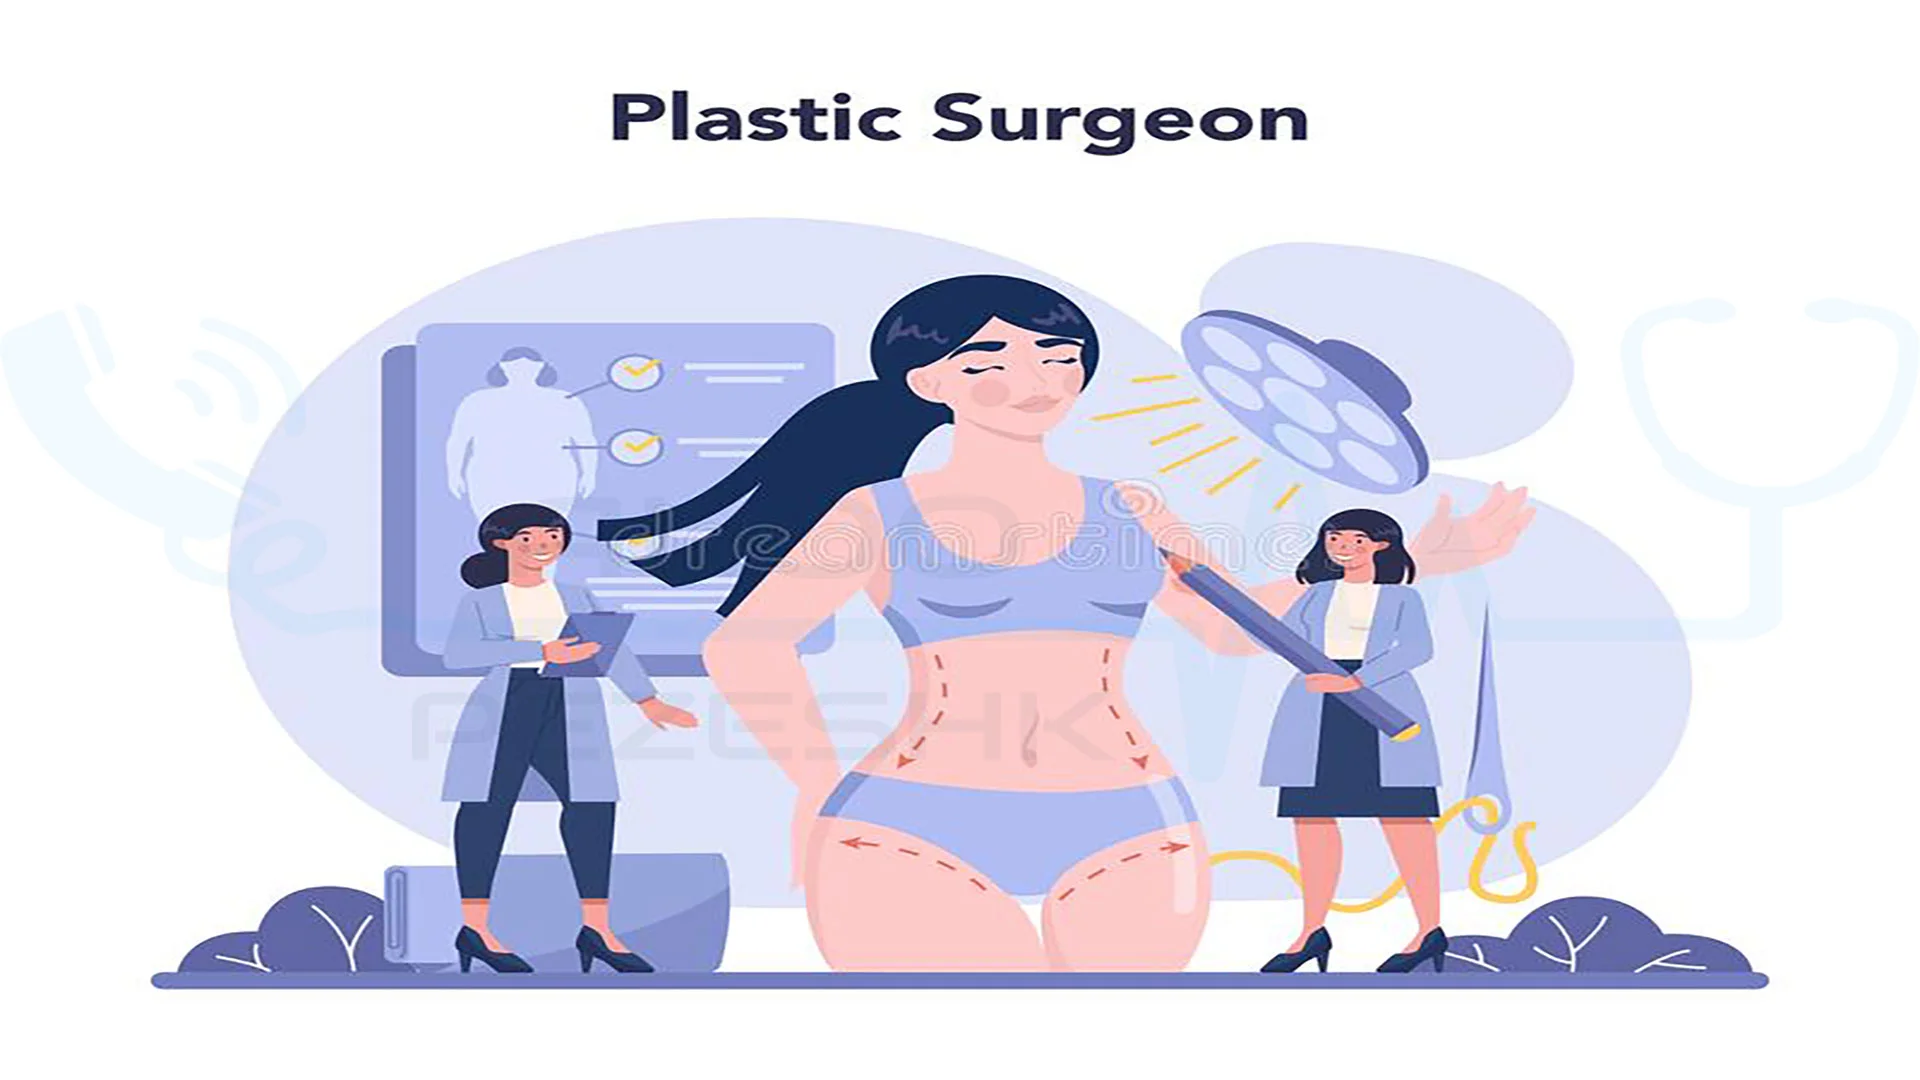 جراحی پلاستیک چیست